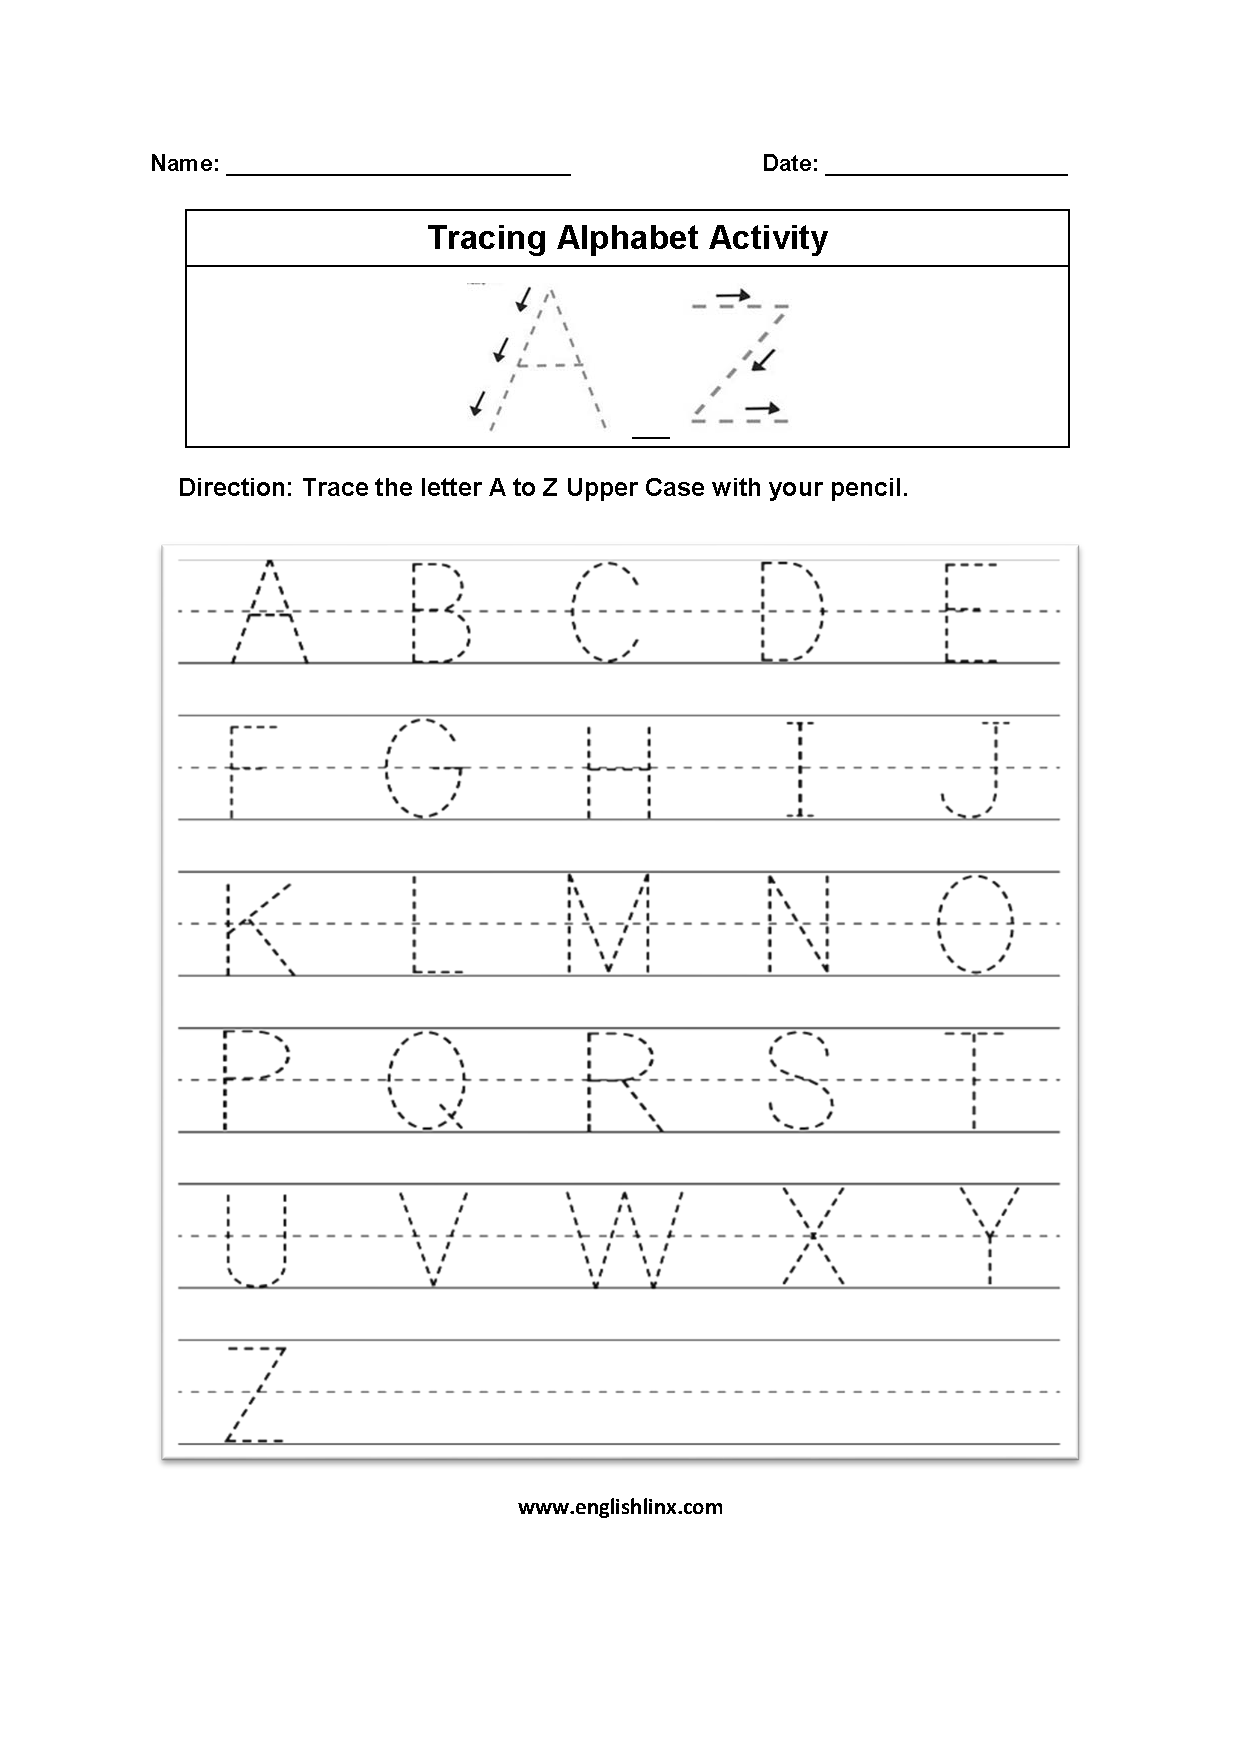 Worksheet ~ Worksheet This Reading Mama Alphabet Activity